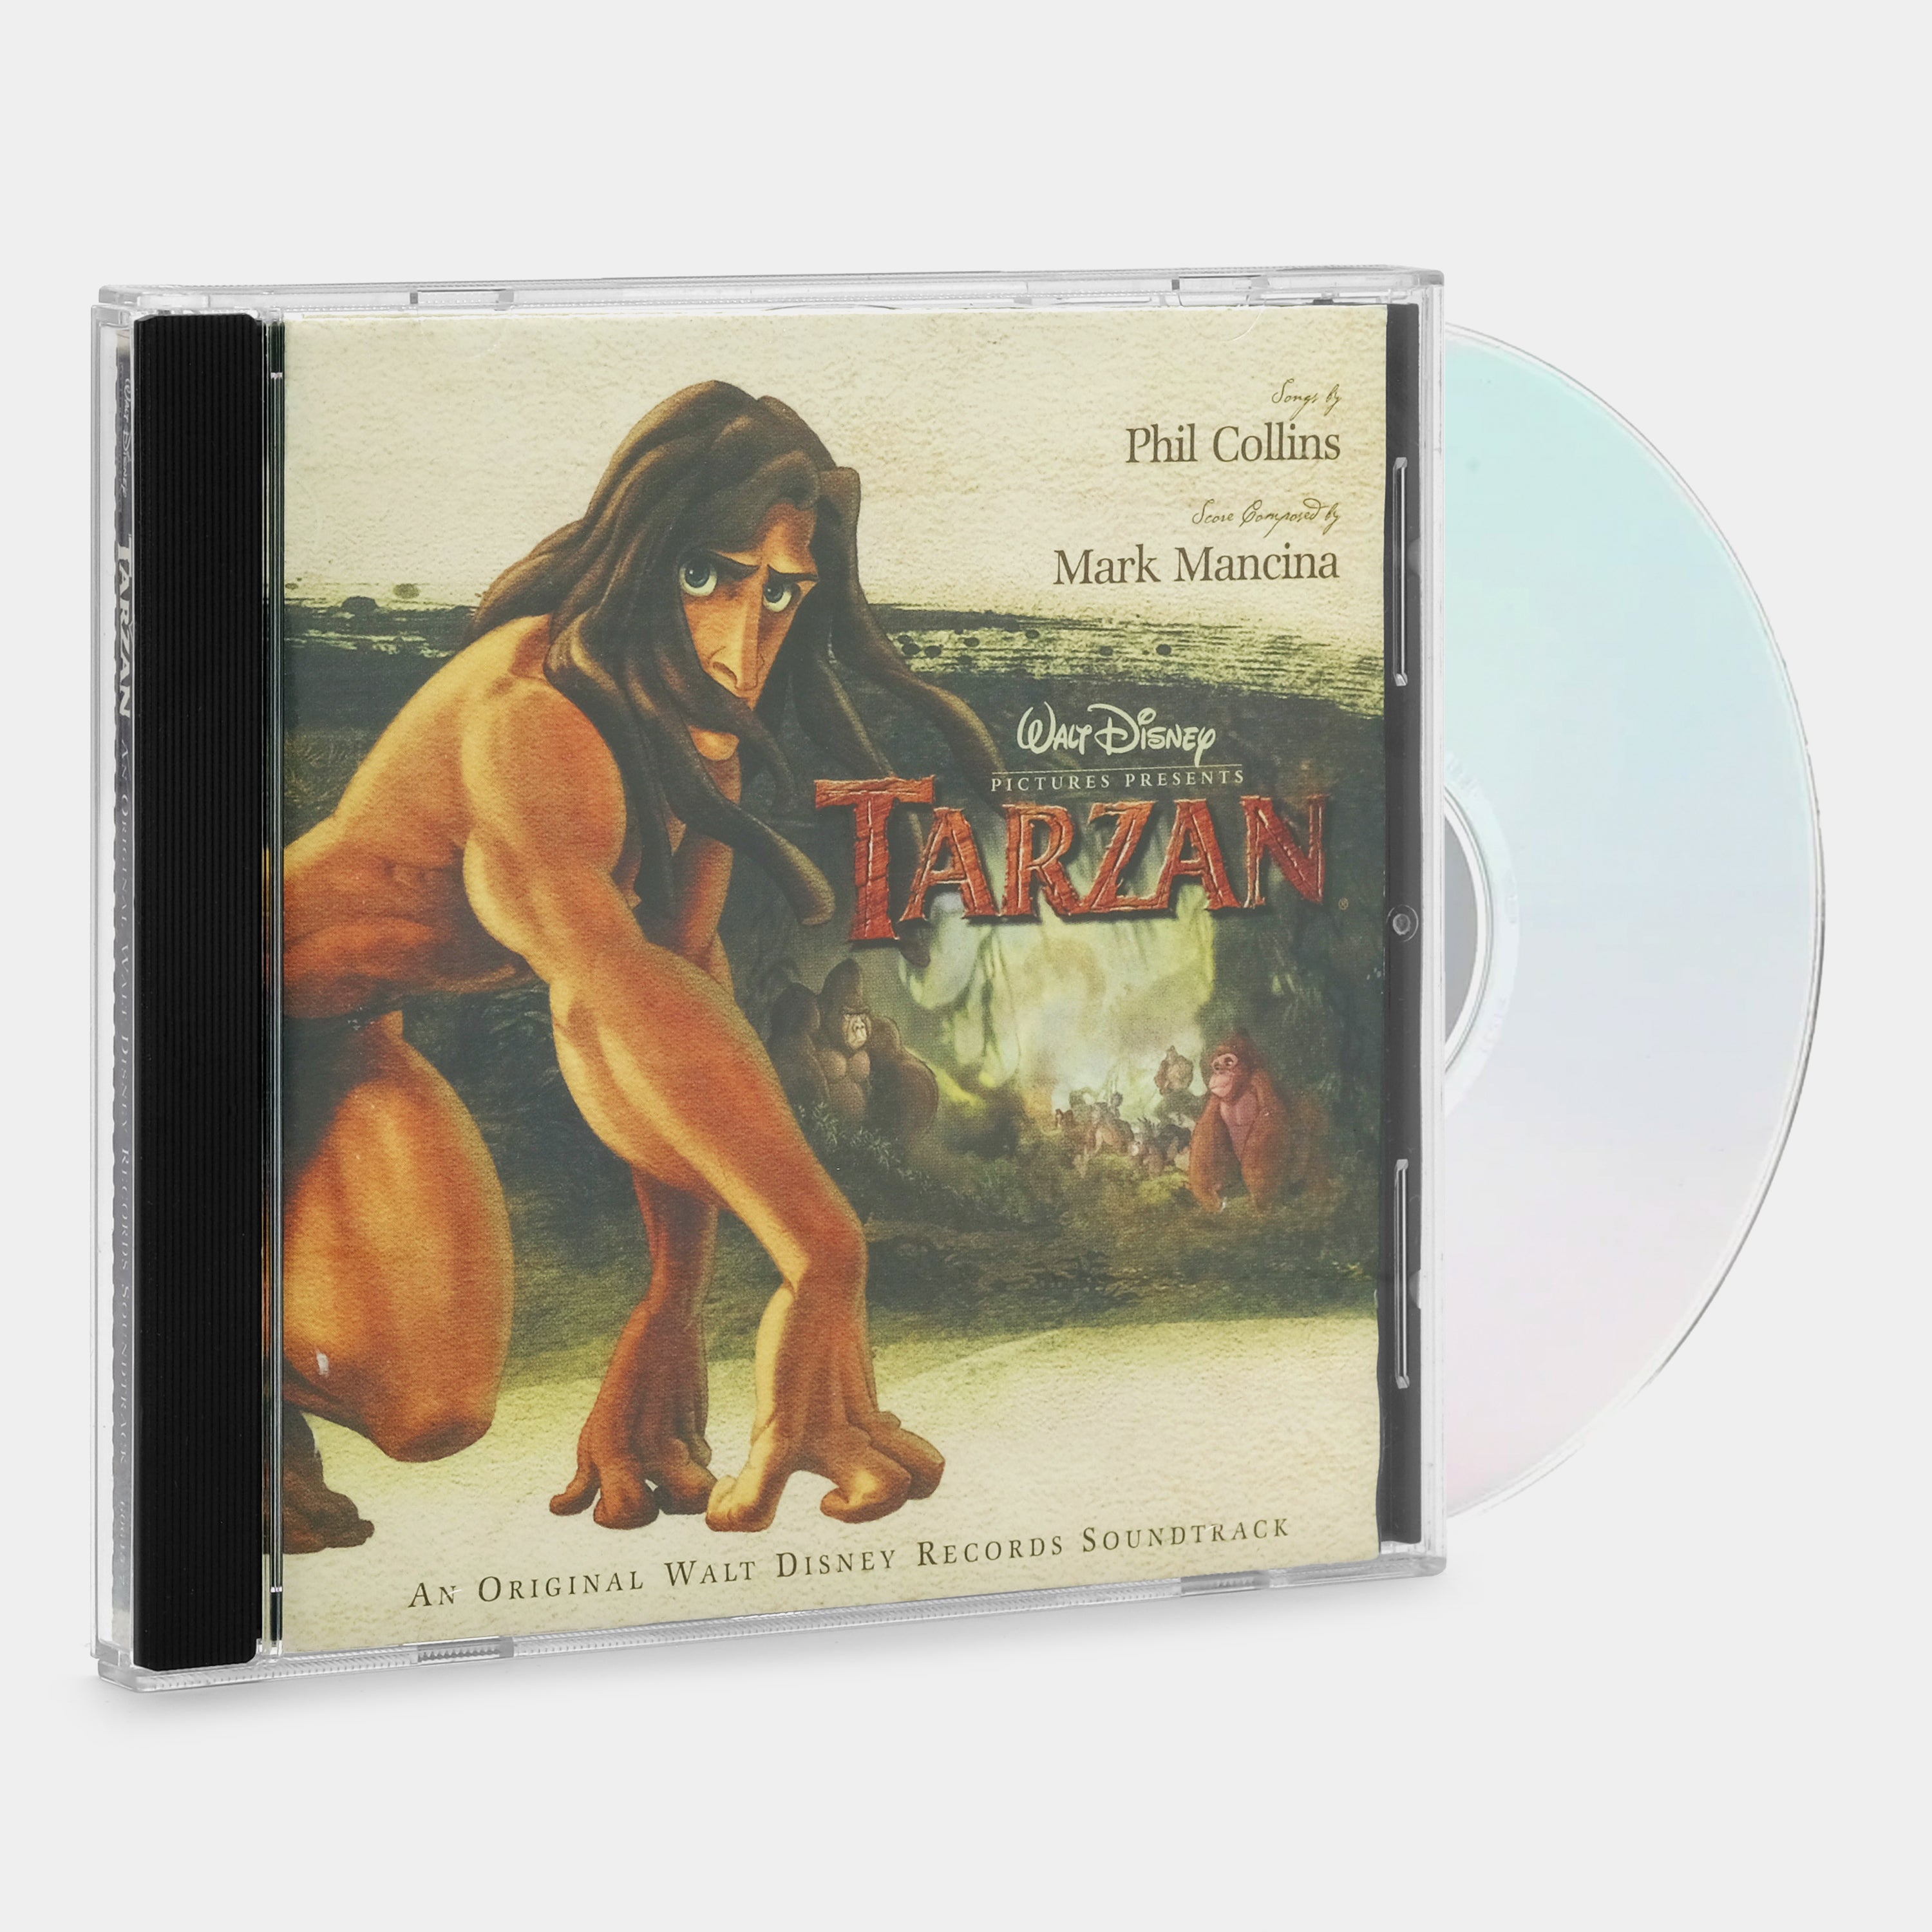 Phil Collins, Mark Mancina - Tarzan (An Original Walt Disney Records Soundtrack) CD